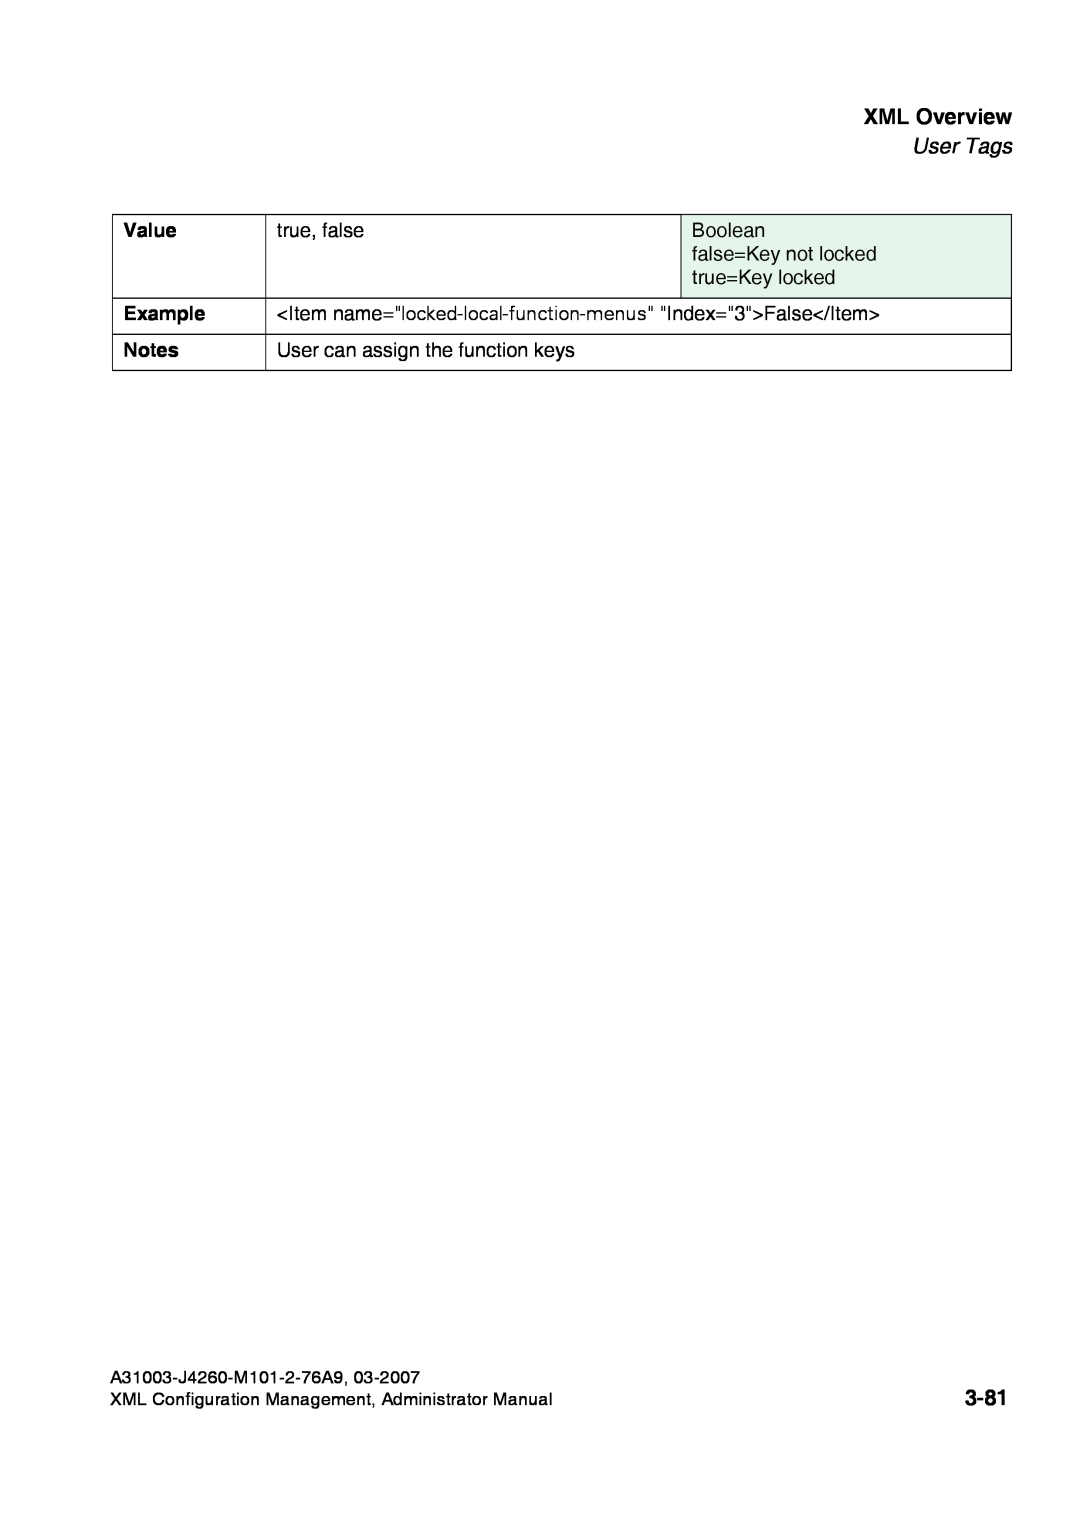 Siemens 410 S V6.0, 420 S V6.0 manual 3-81, XML Overview, User Tags 